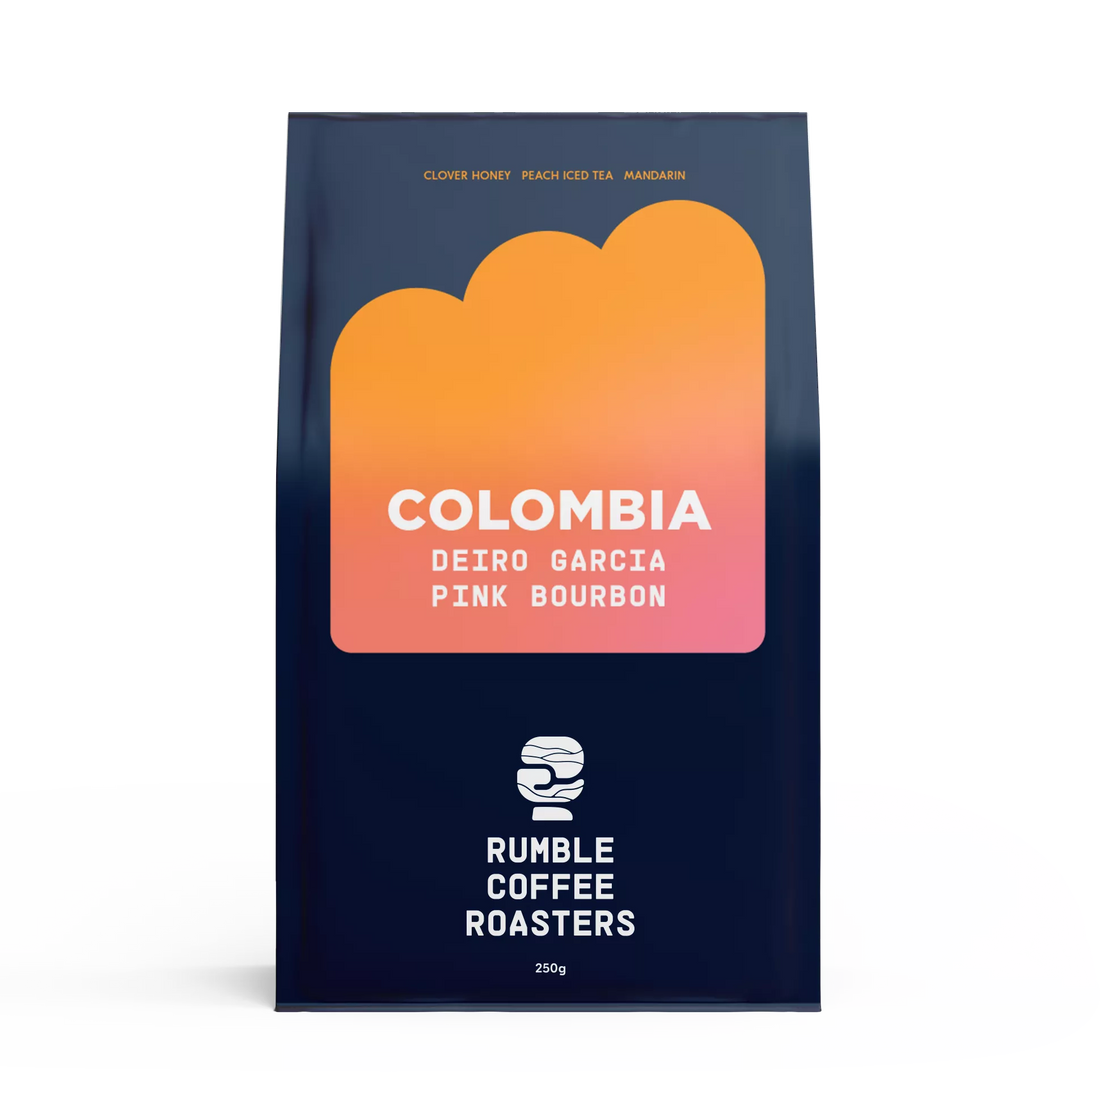 Colombia Deiro Garcia Filter - Rumble Coffee